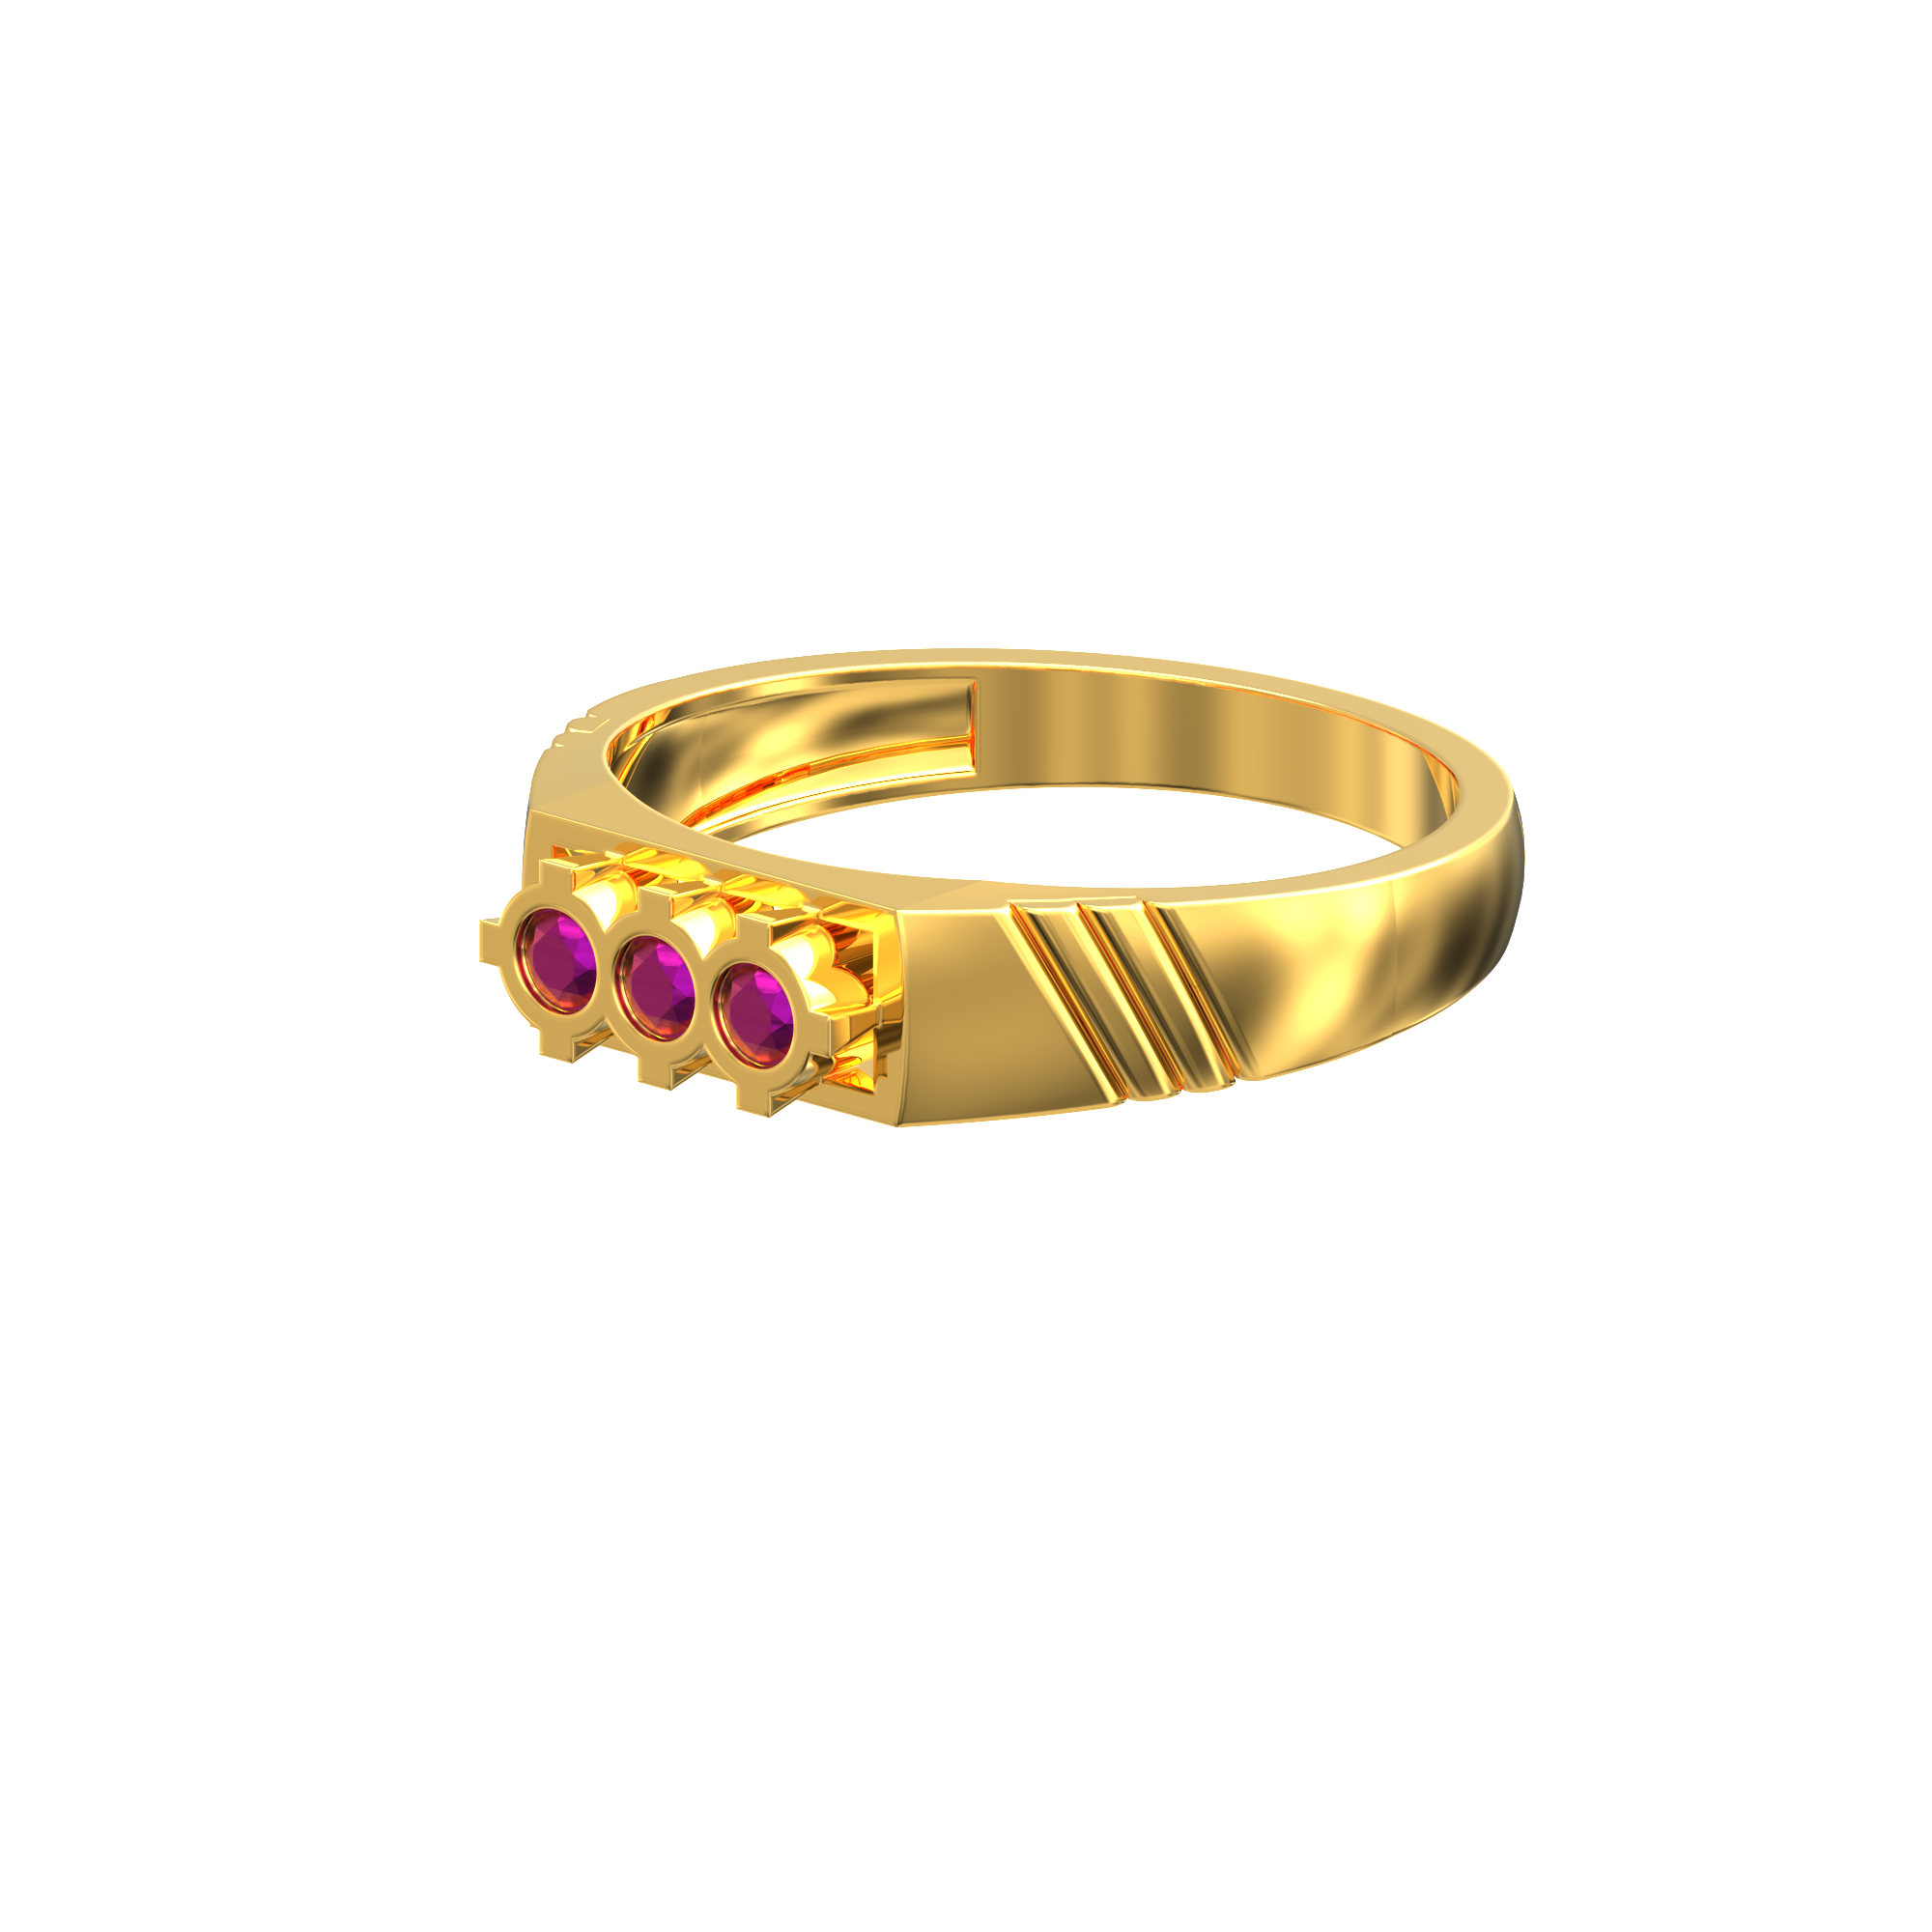 10gms gold balaji | Bridal gold jewellery designs, Gold ring designs, Mens  bracelet gold jewelry